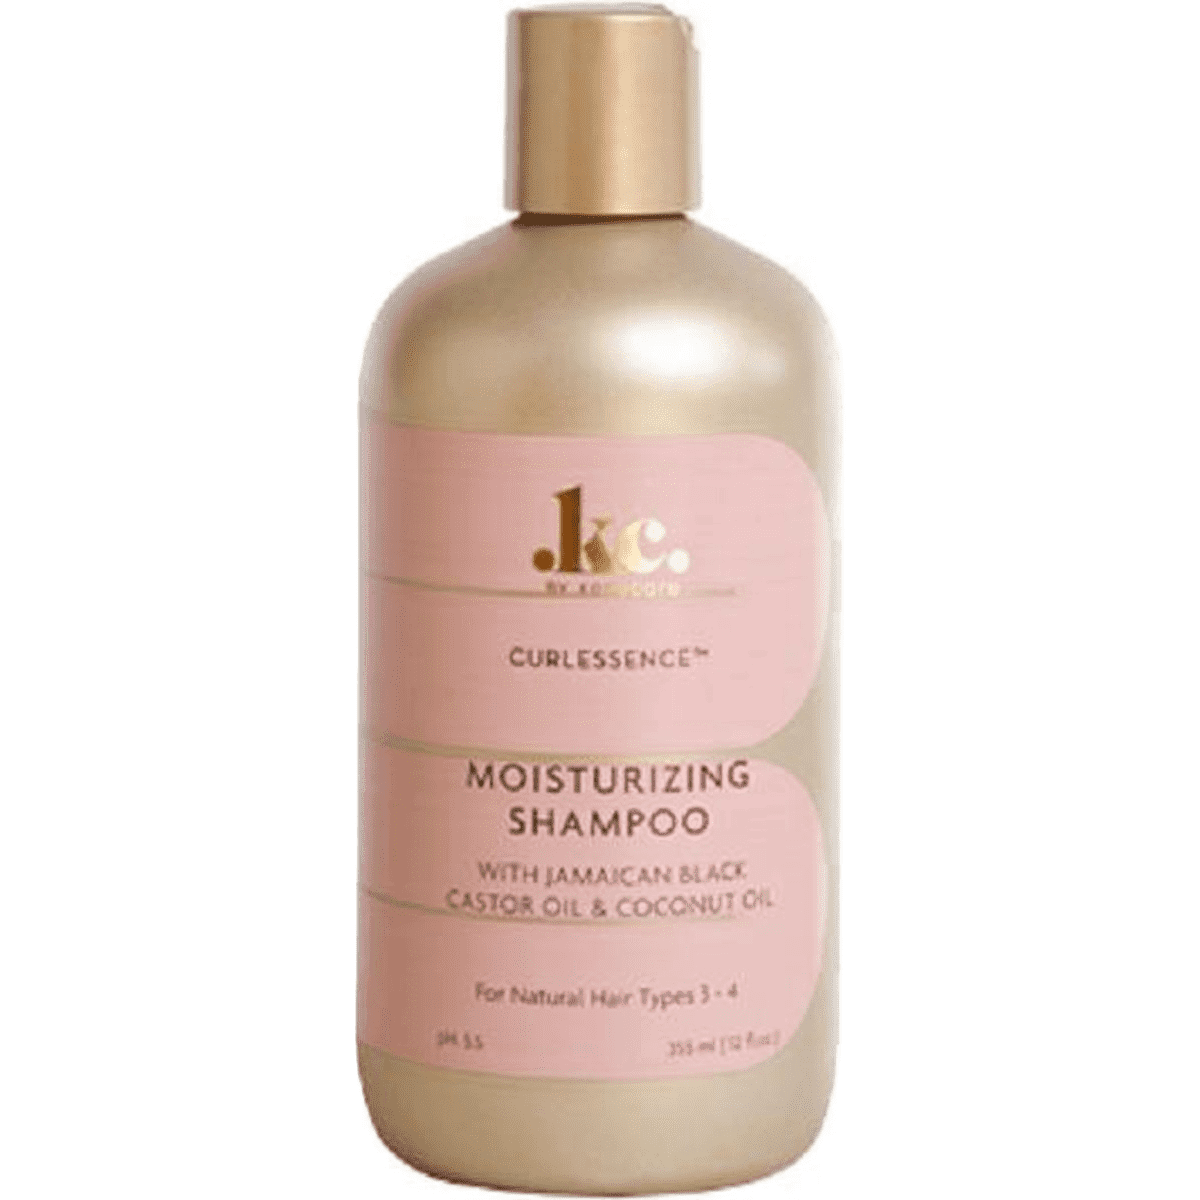 Keracare curlssence moisturizing shampoo 355ml